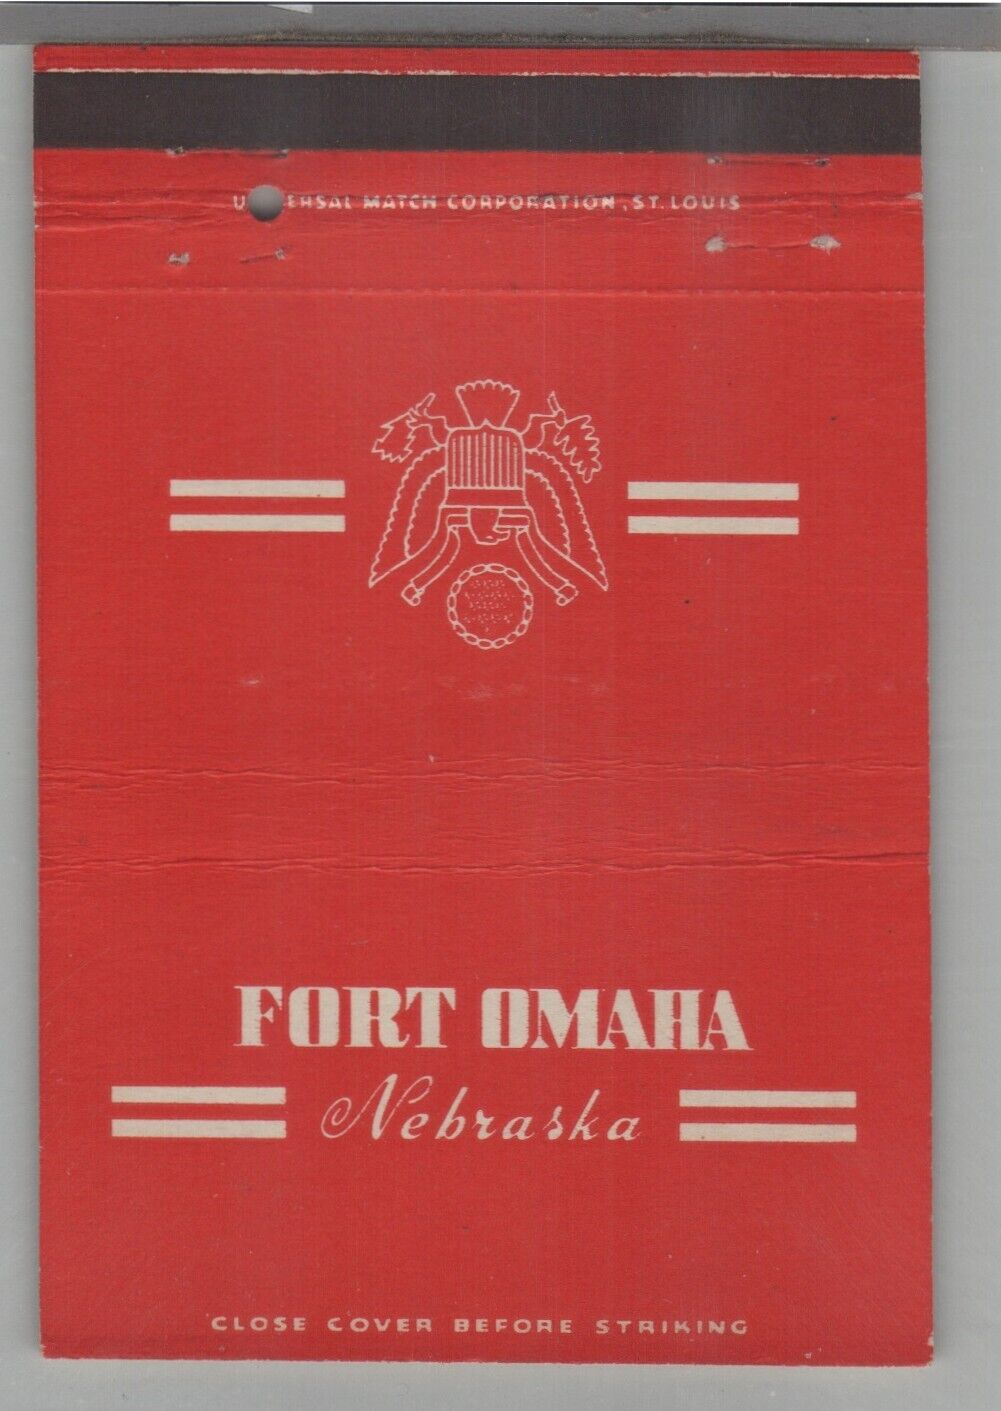 Matchbook Cover - Post Card - US Army Fort Omaha Nebraska